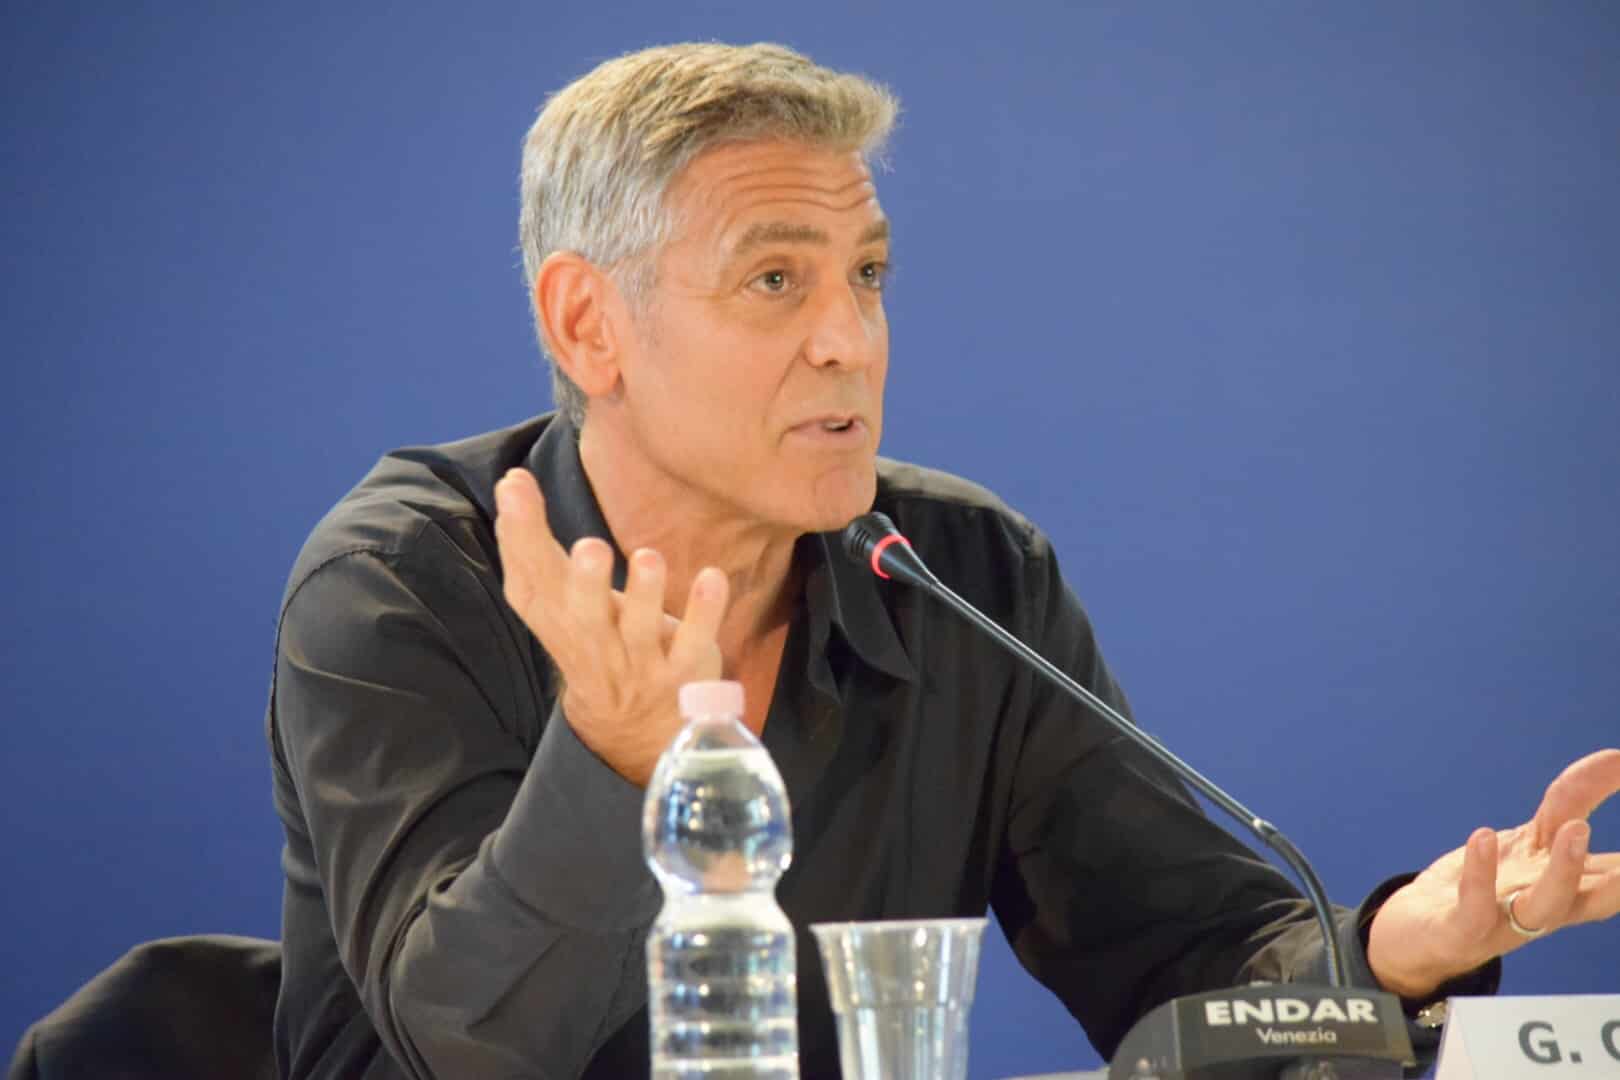 Catch 22: Hulu e George Clooney a lavoro sulla serie TV